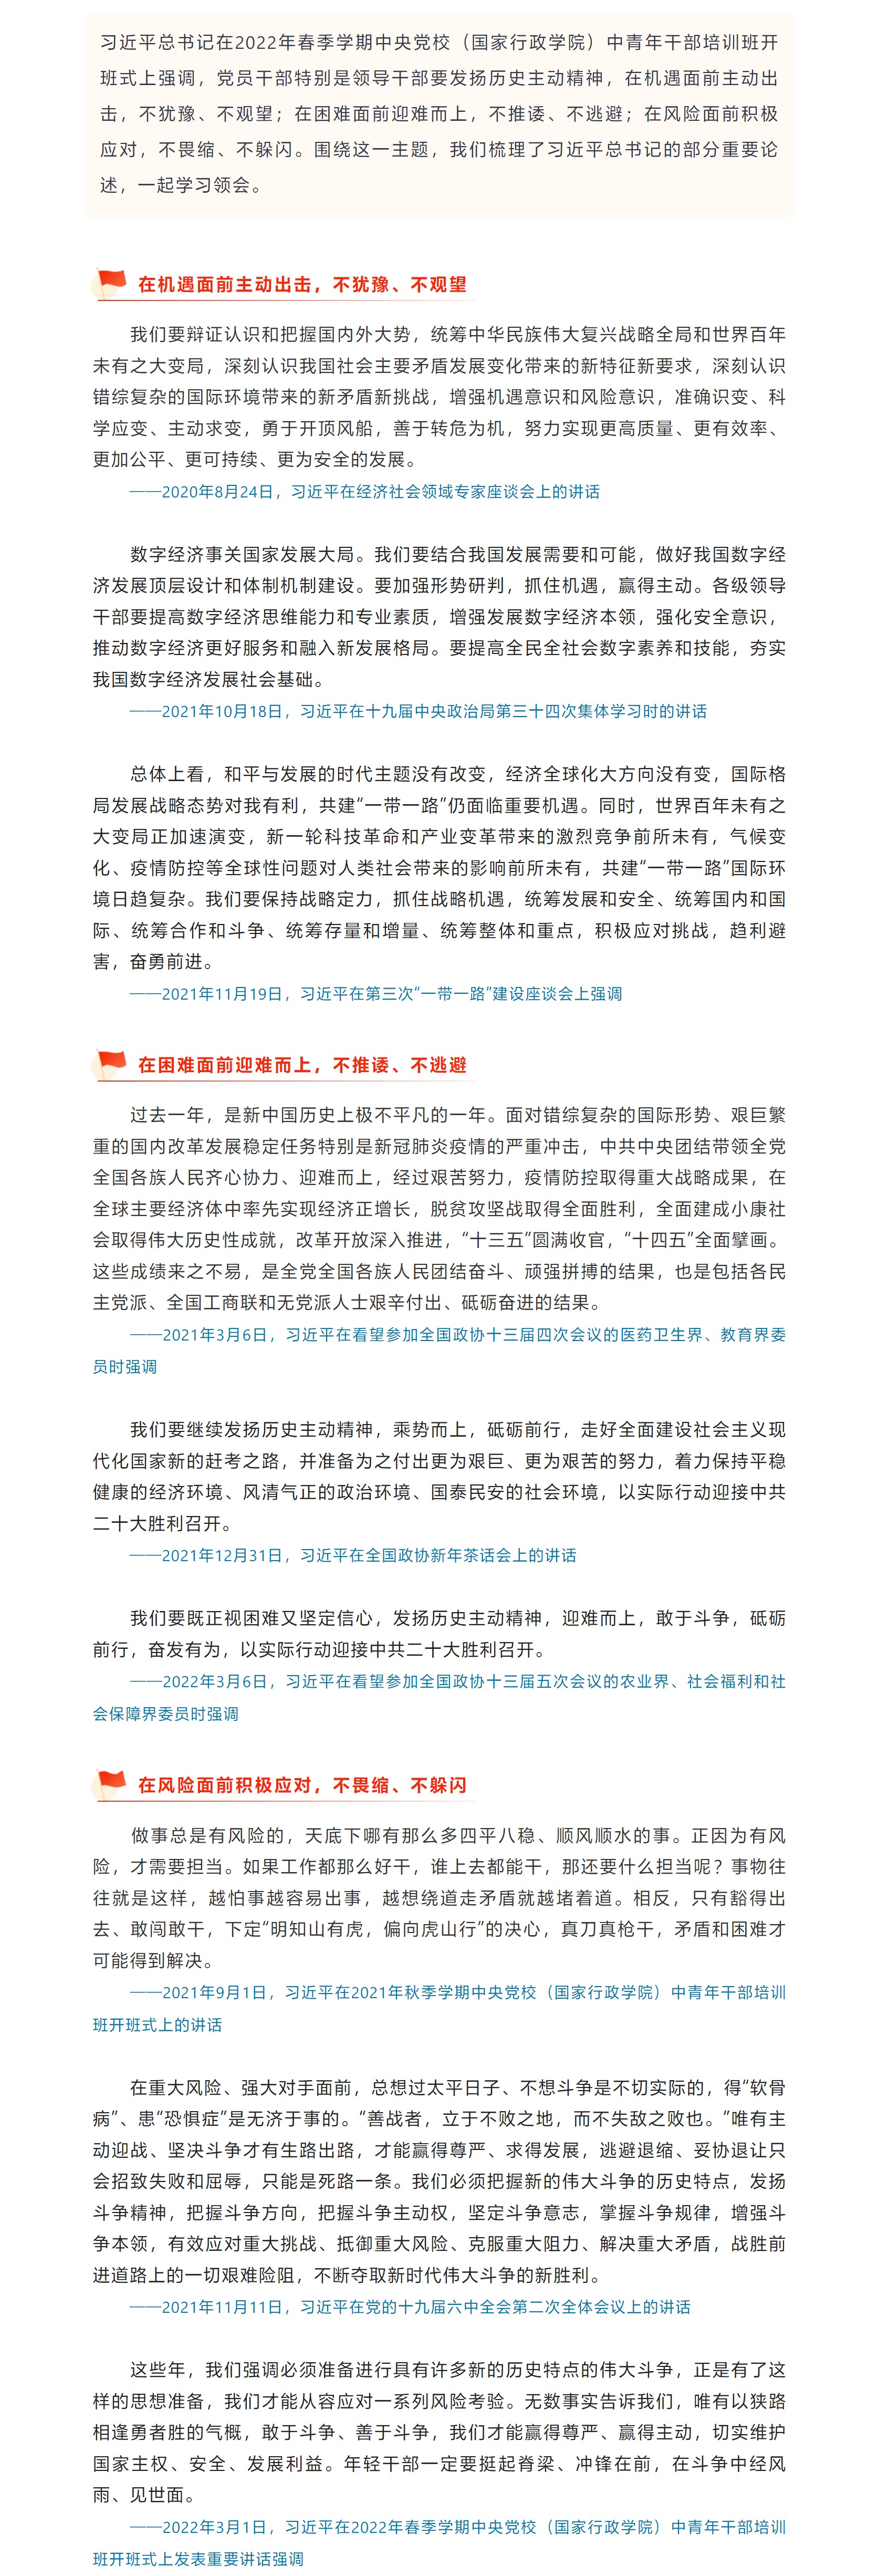 FireShot Capture 389 - 党员干部如何发扬历史主动精神，习近平这样强调 - mp.weixin.qq.com.jpg